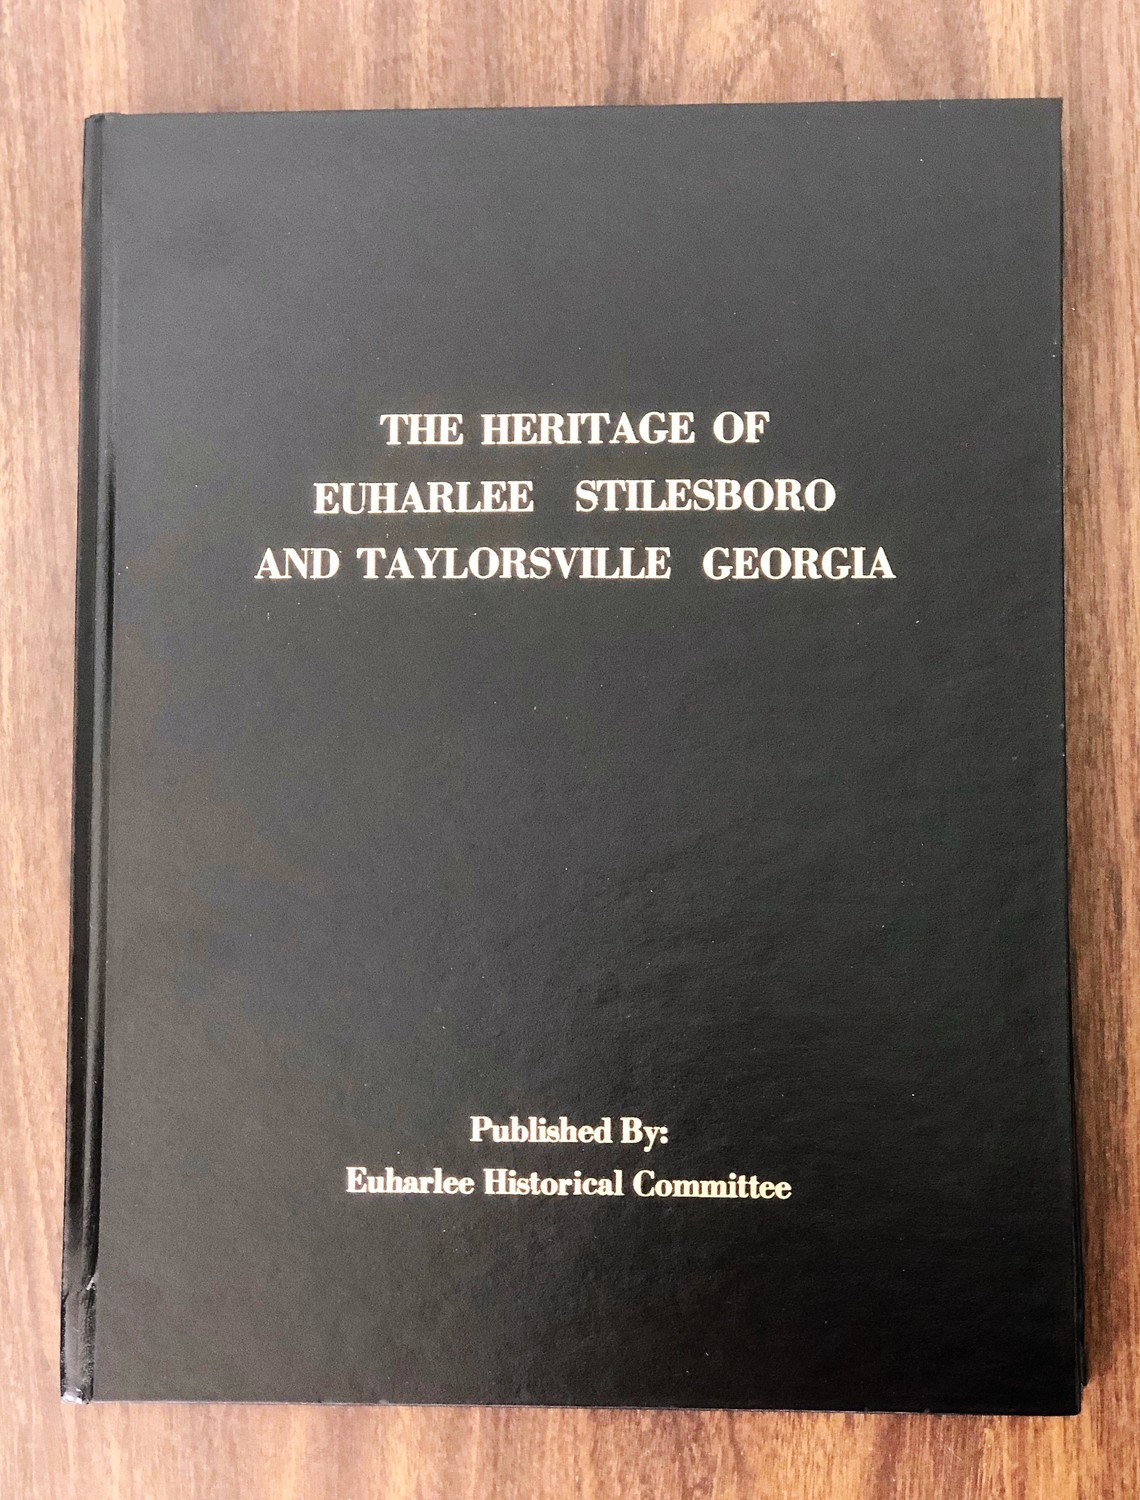 The Heritage of Euharlee, Stilesboro, and Taylorsville